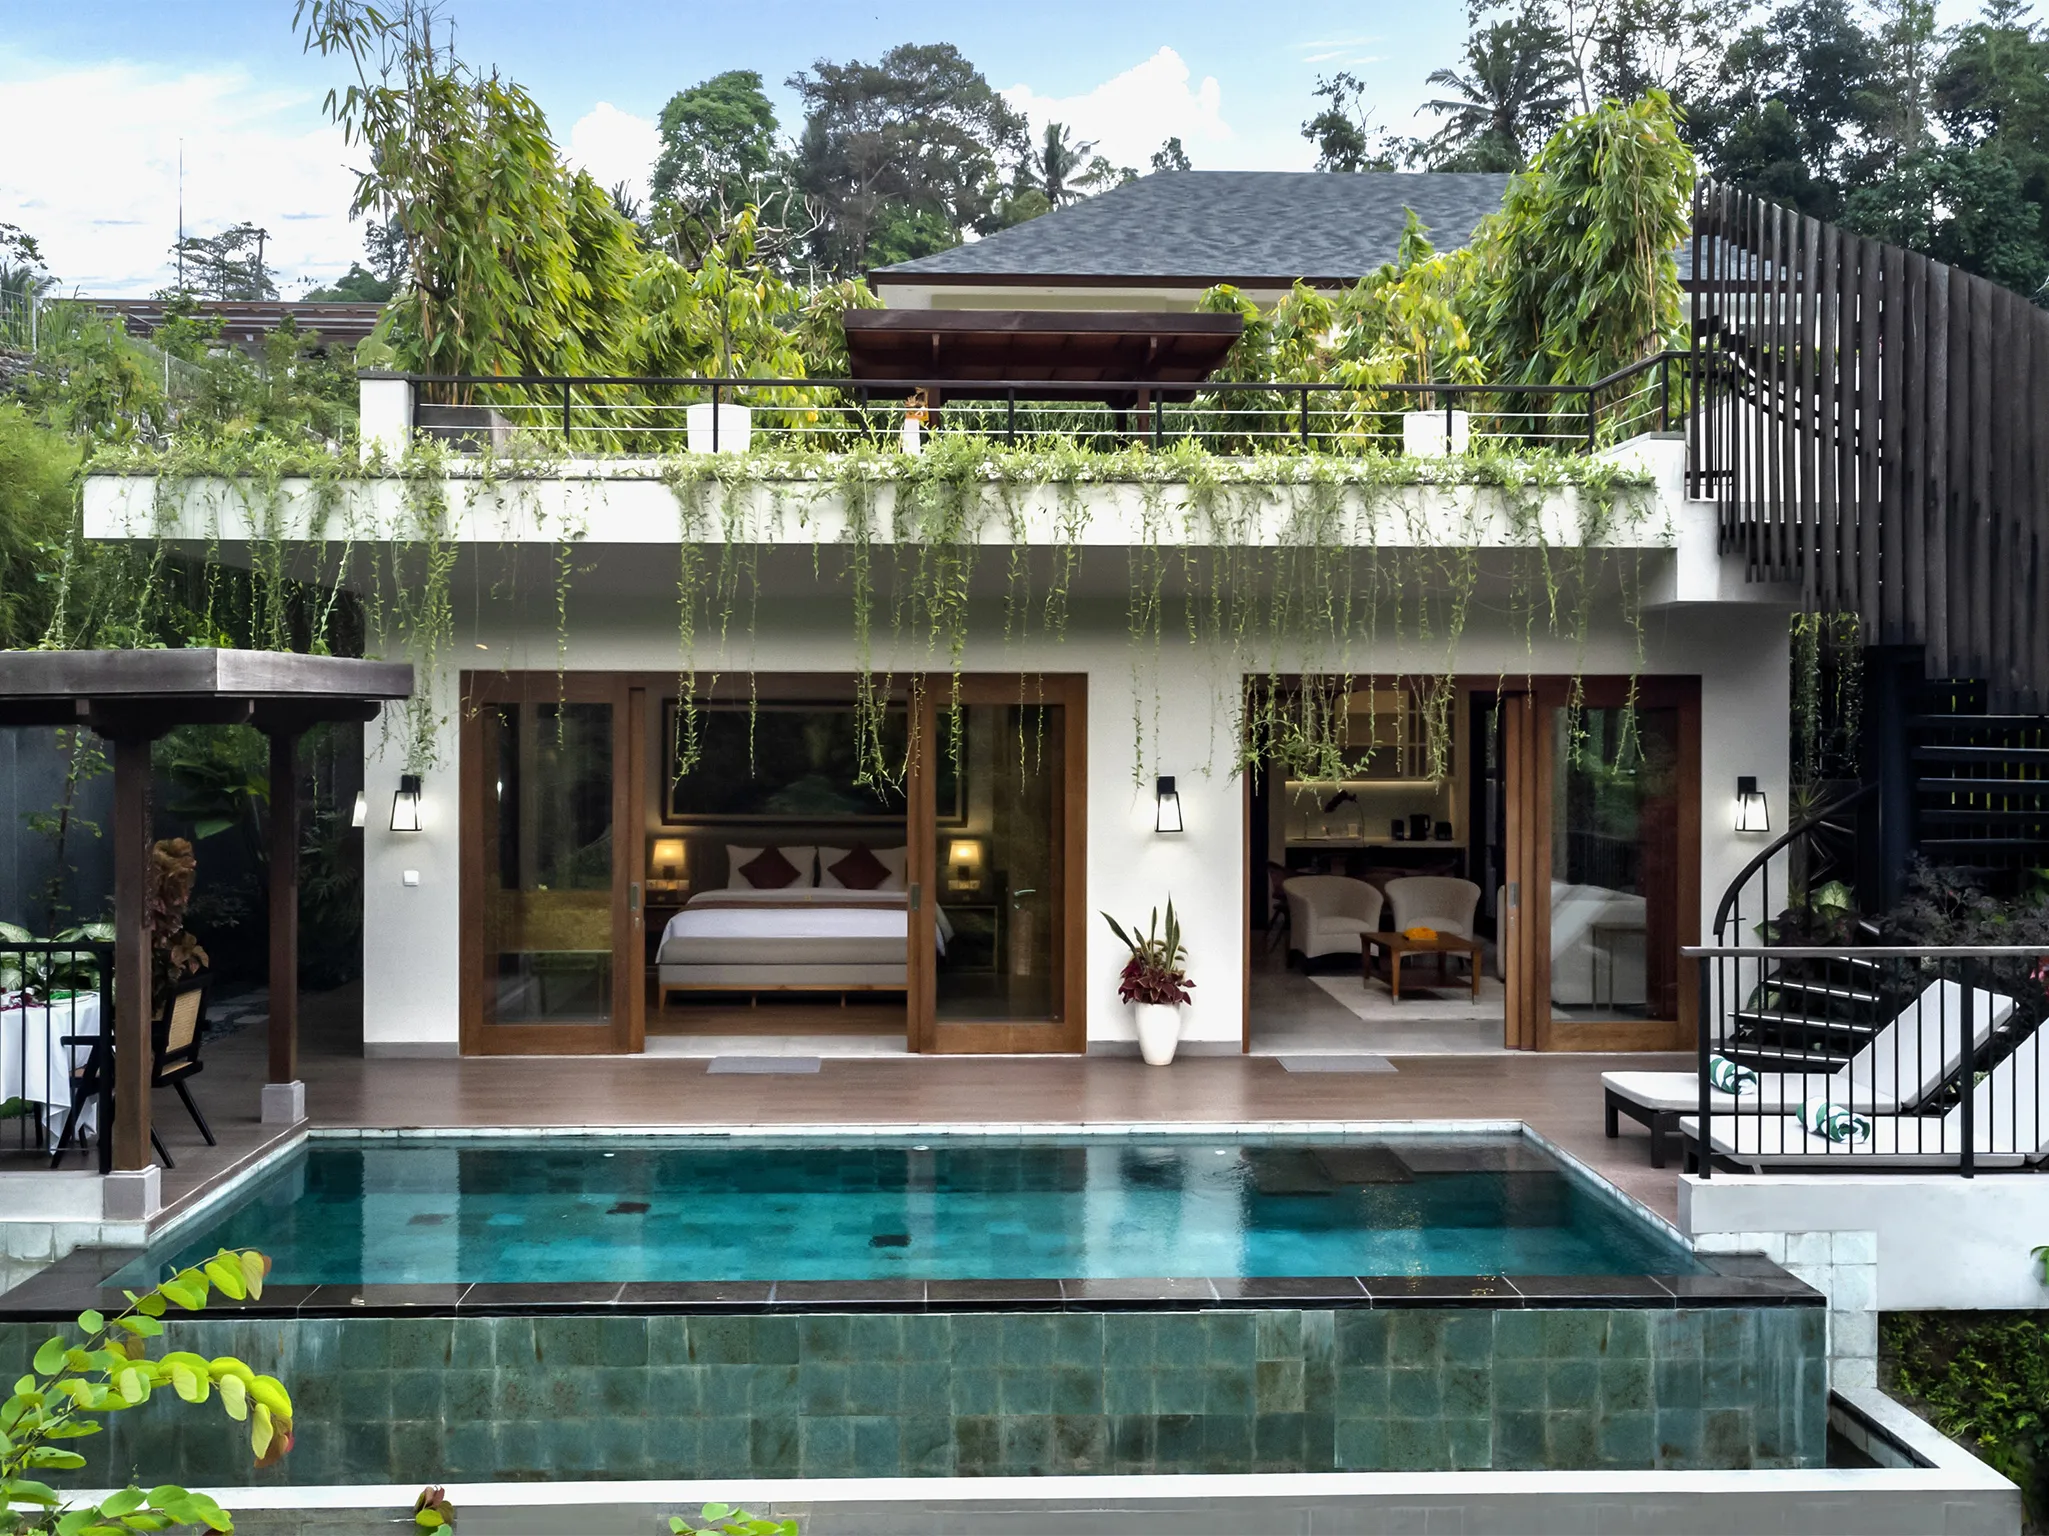 Pala Ubud - Villa Catur - Cosy modern tropical riverside villa